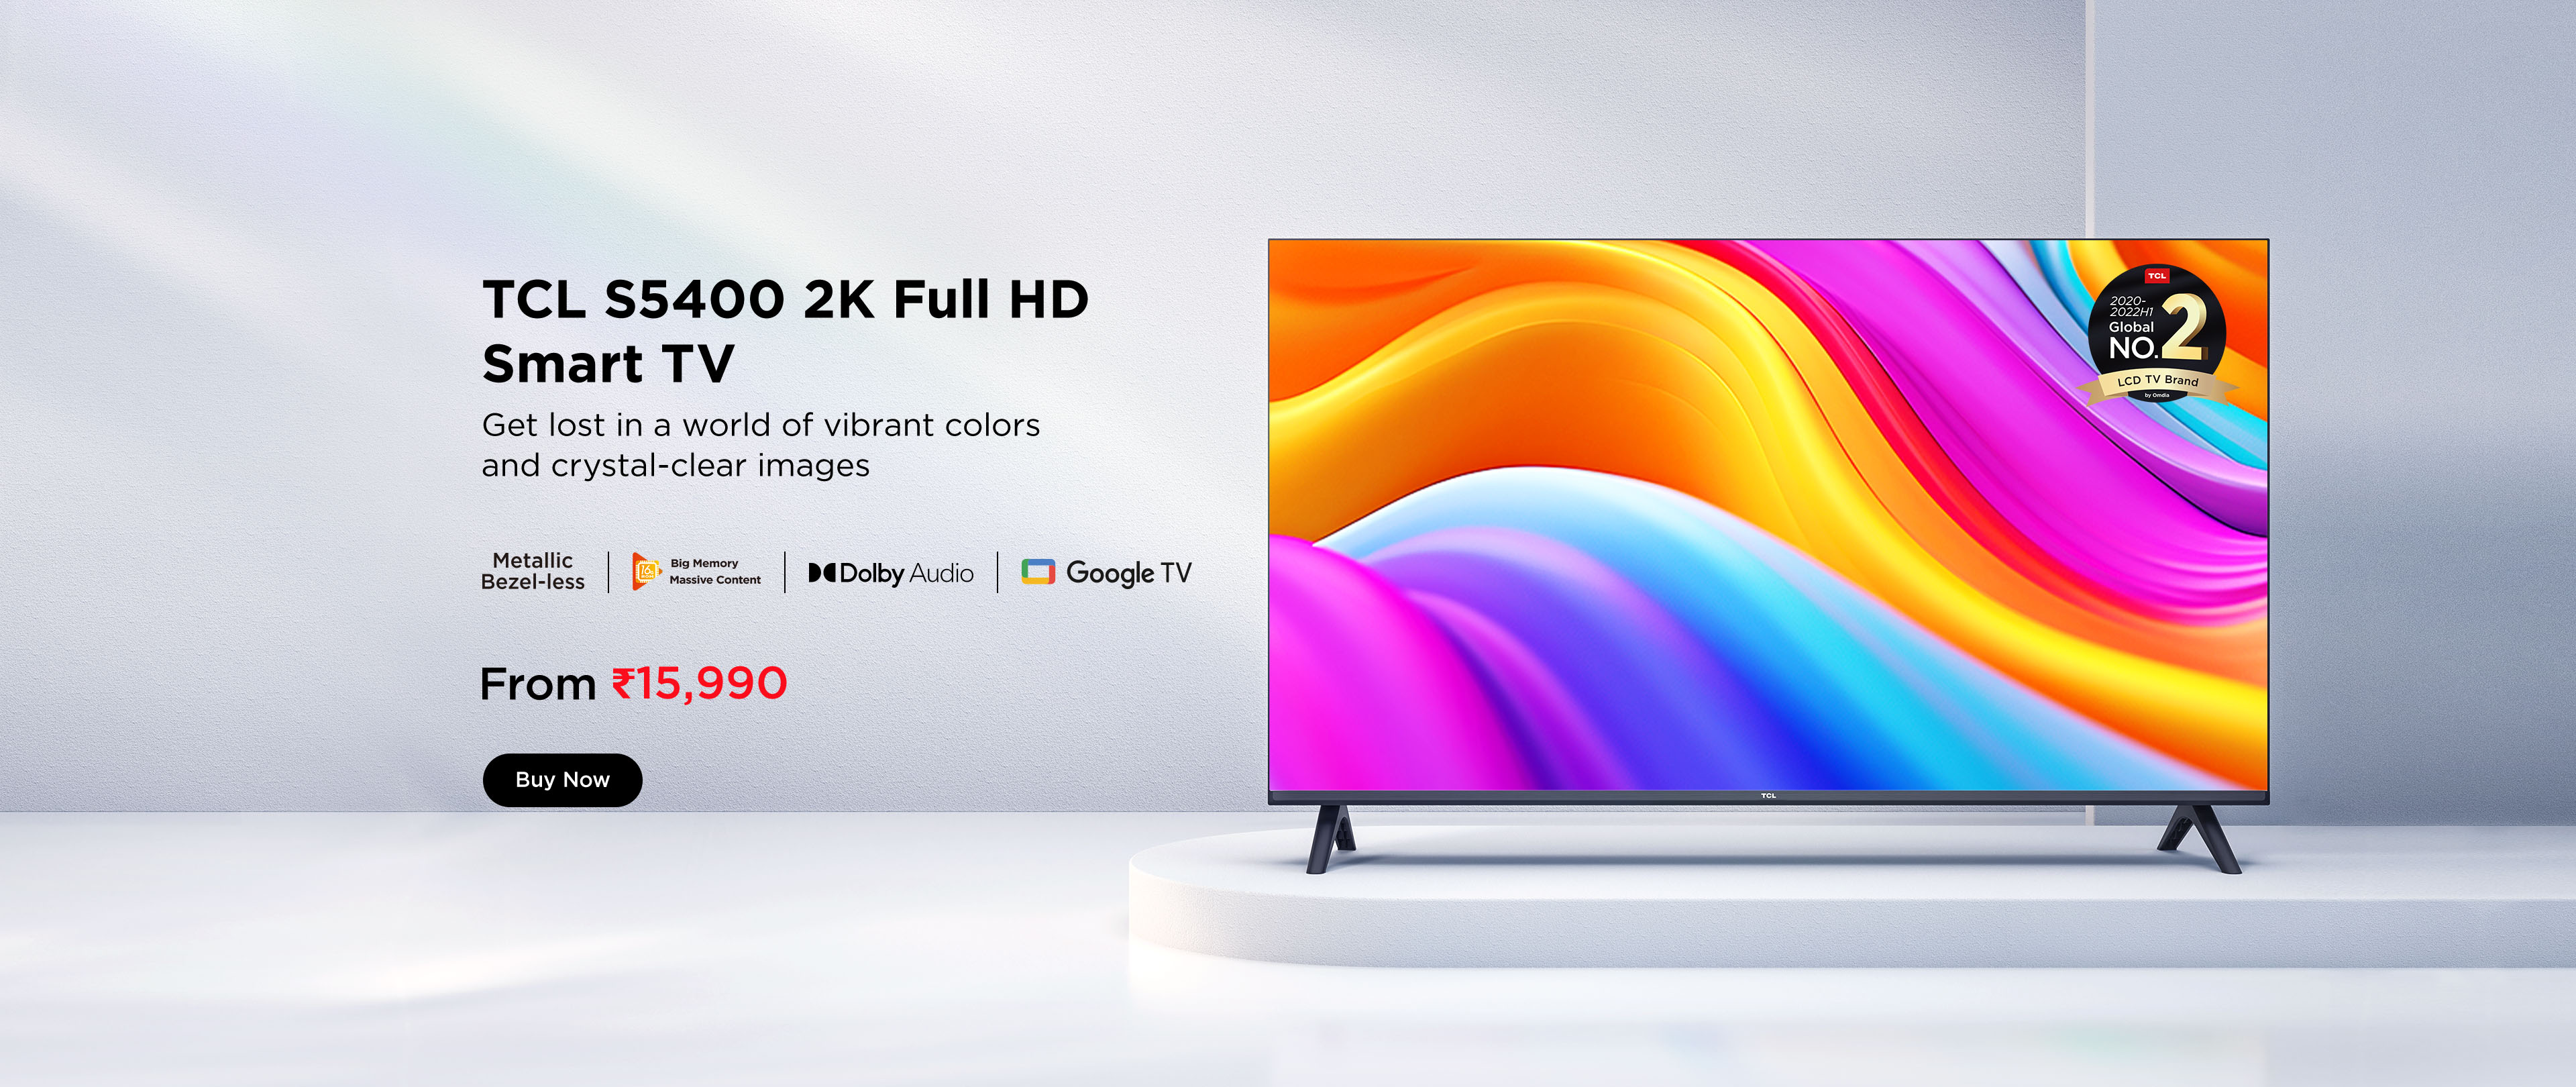 TCL S5400 2K Full HD Smart TV